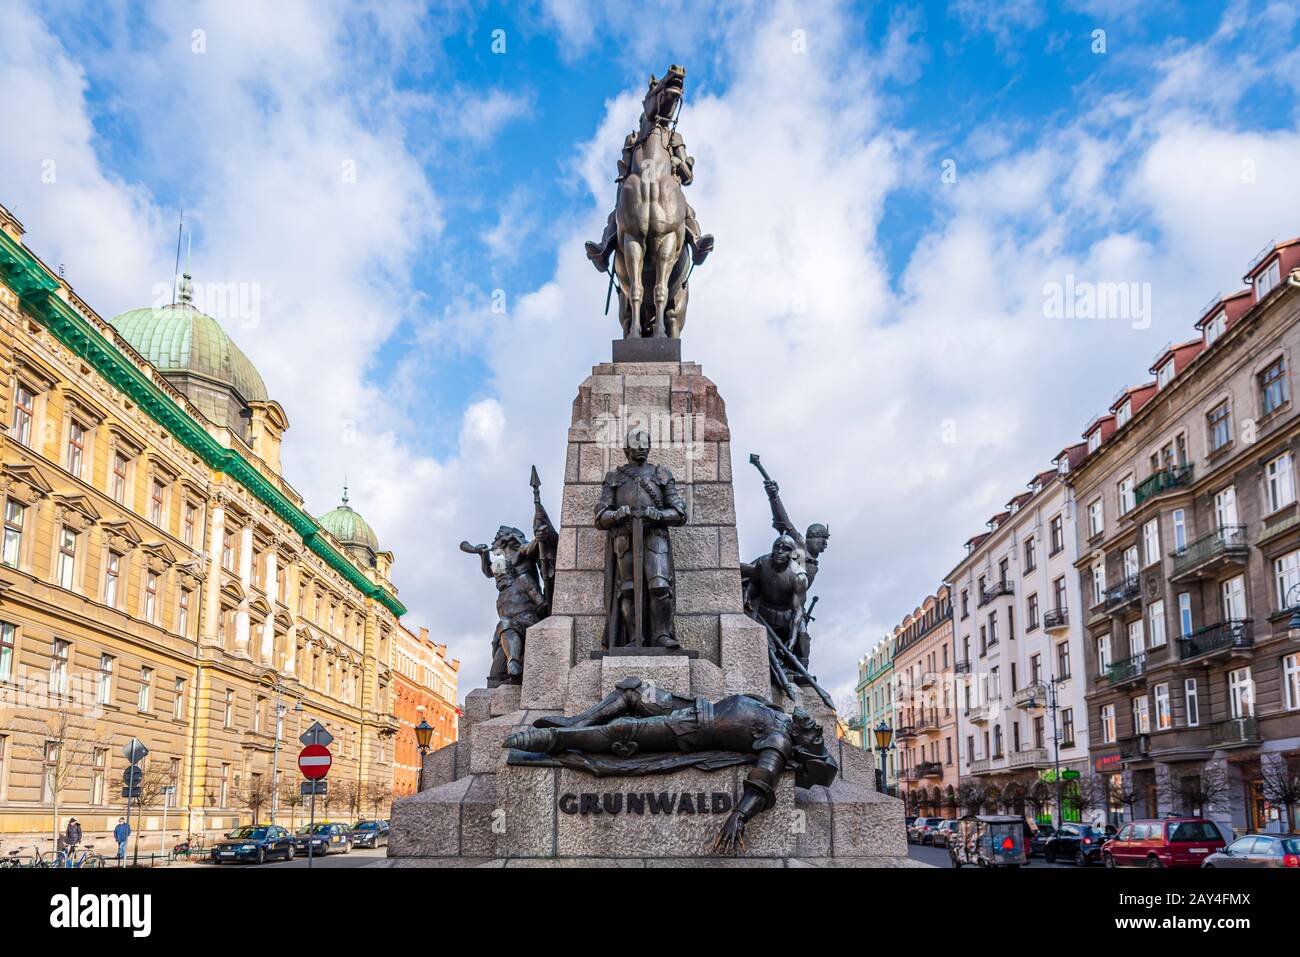 Statue of Grunwald, Krakow, Poland Stock Photo